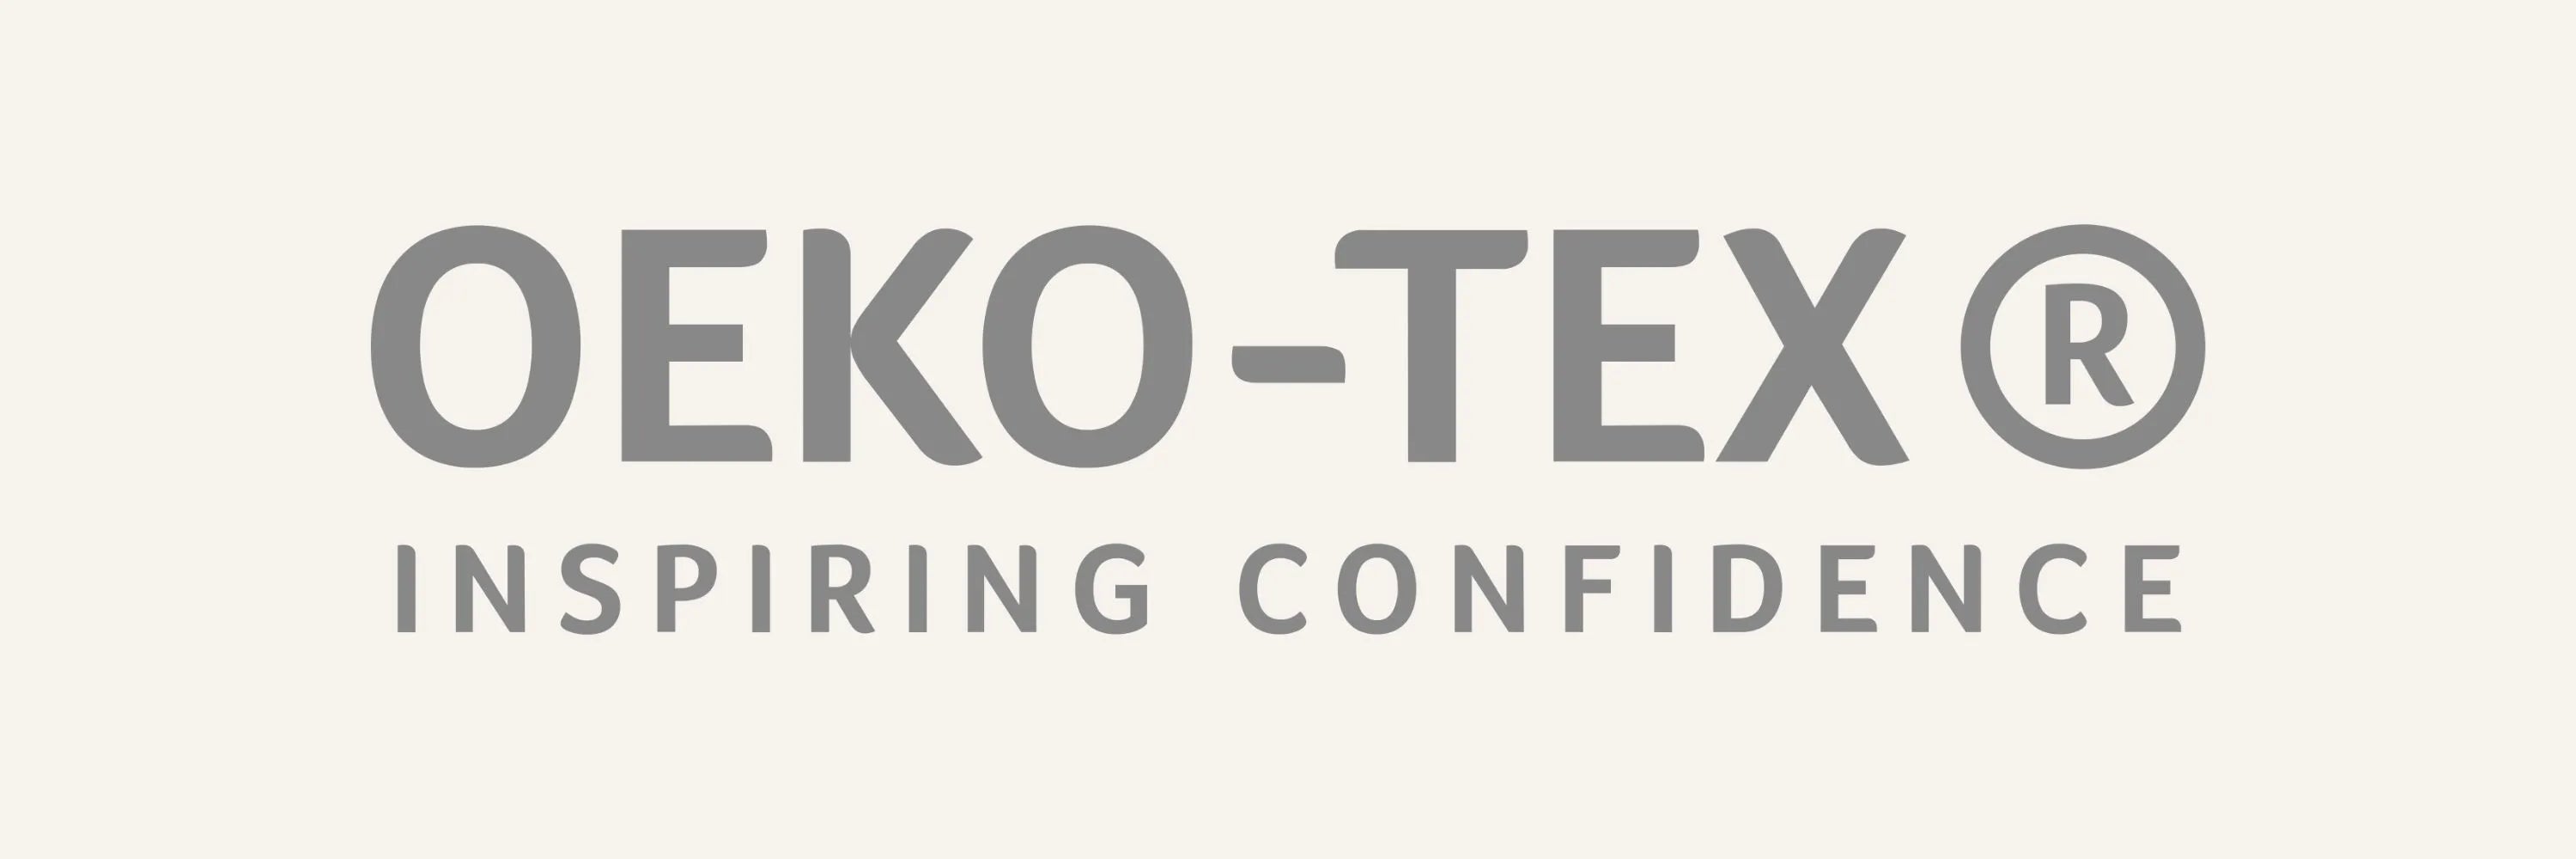 oeko-tex certified fabric